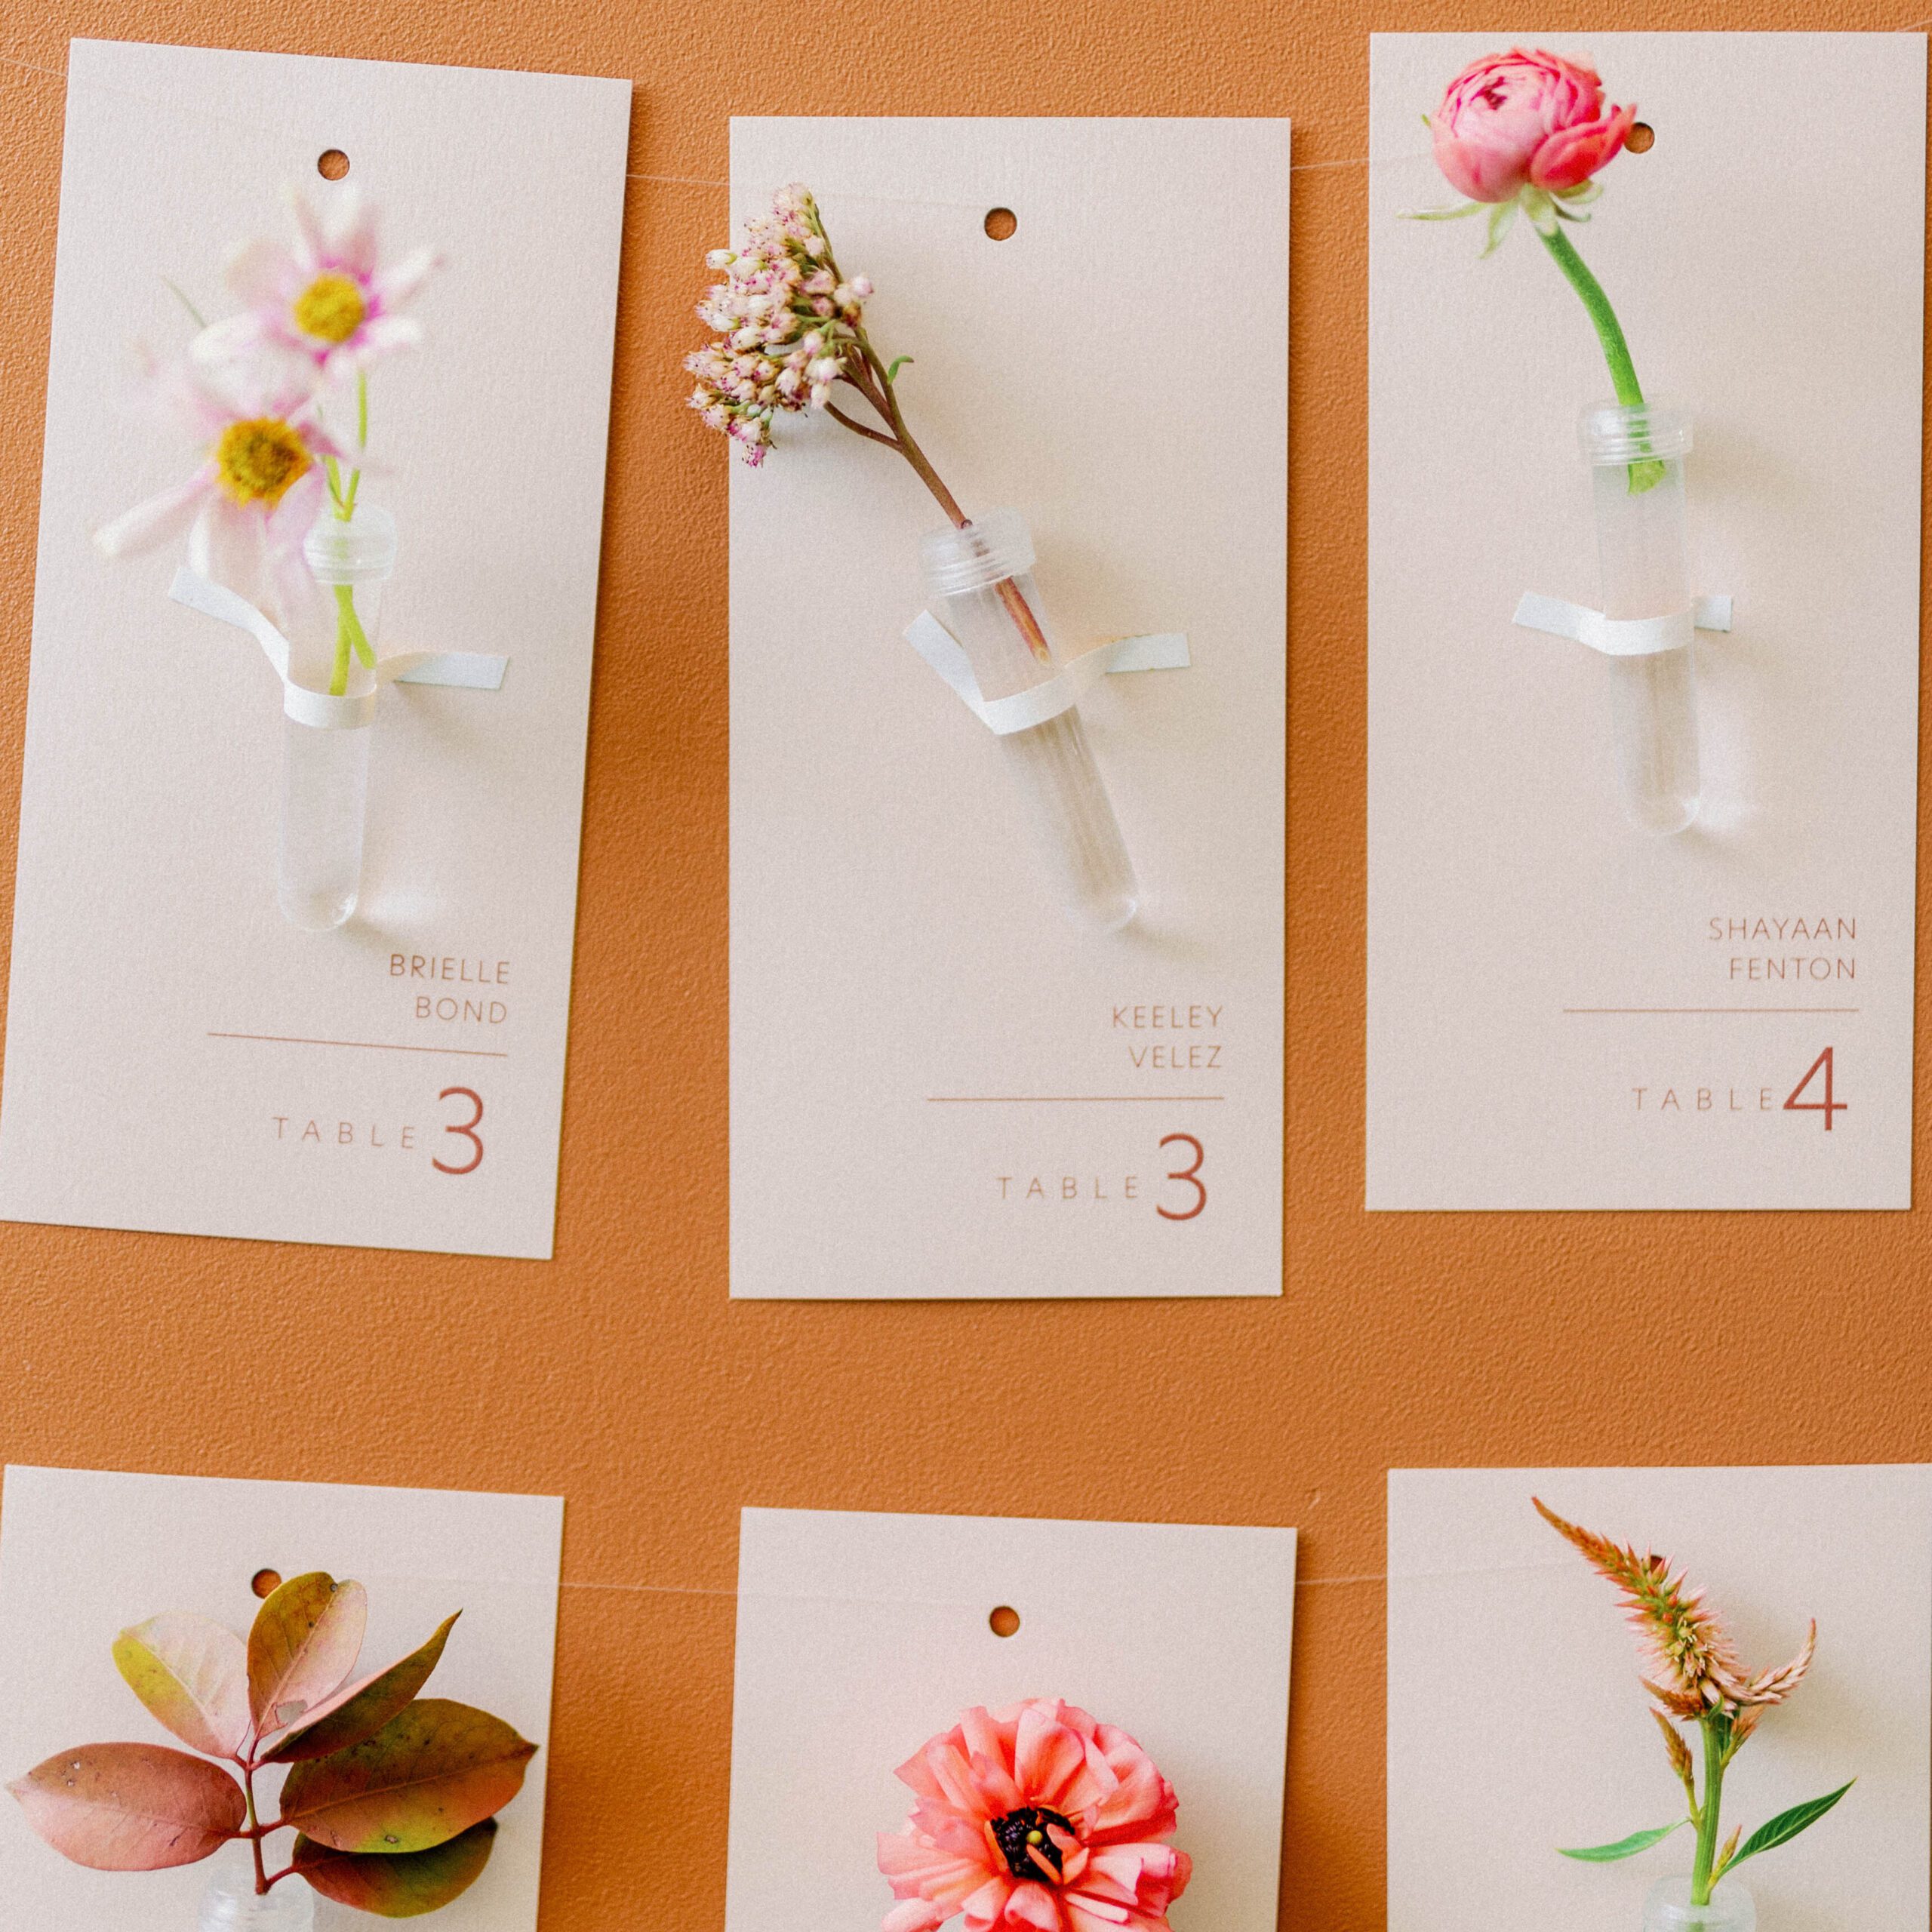 floral placecard inspiration idea